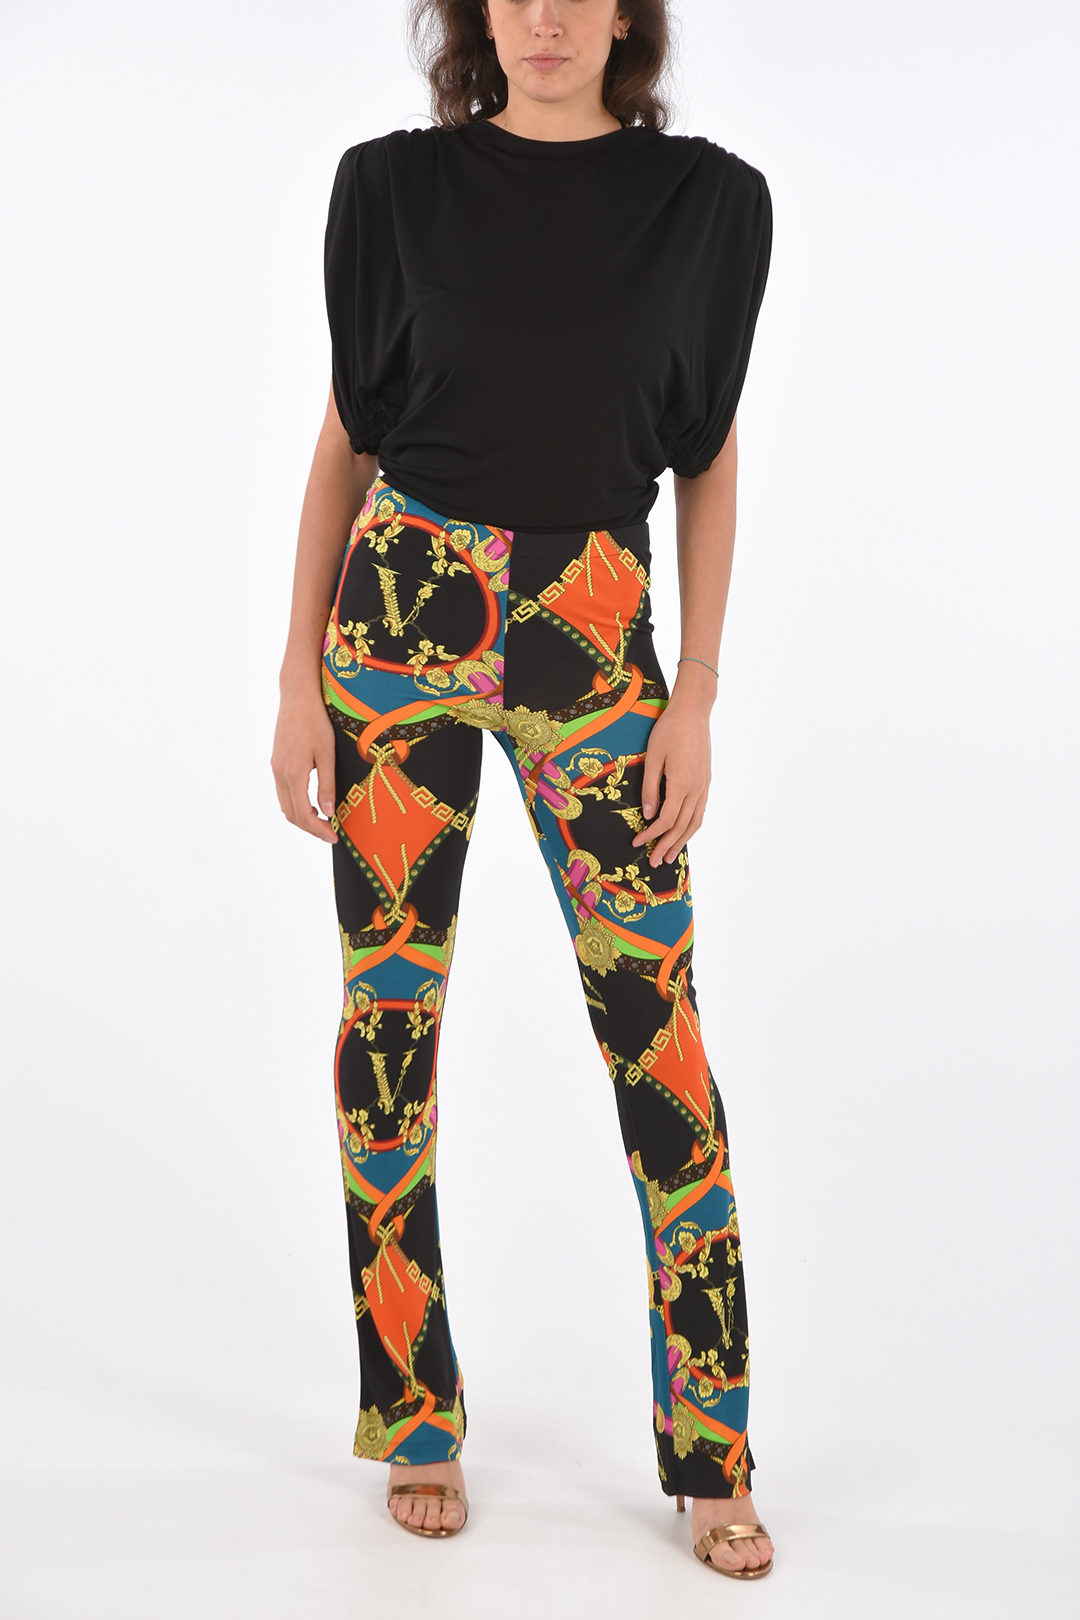 Versace abstract print high-rise waistBoot cut leggings women - Glamood ...